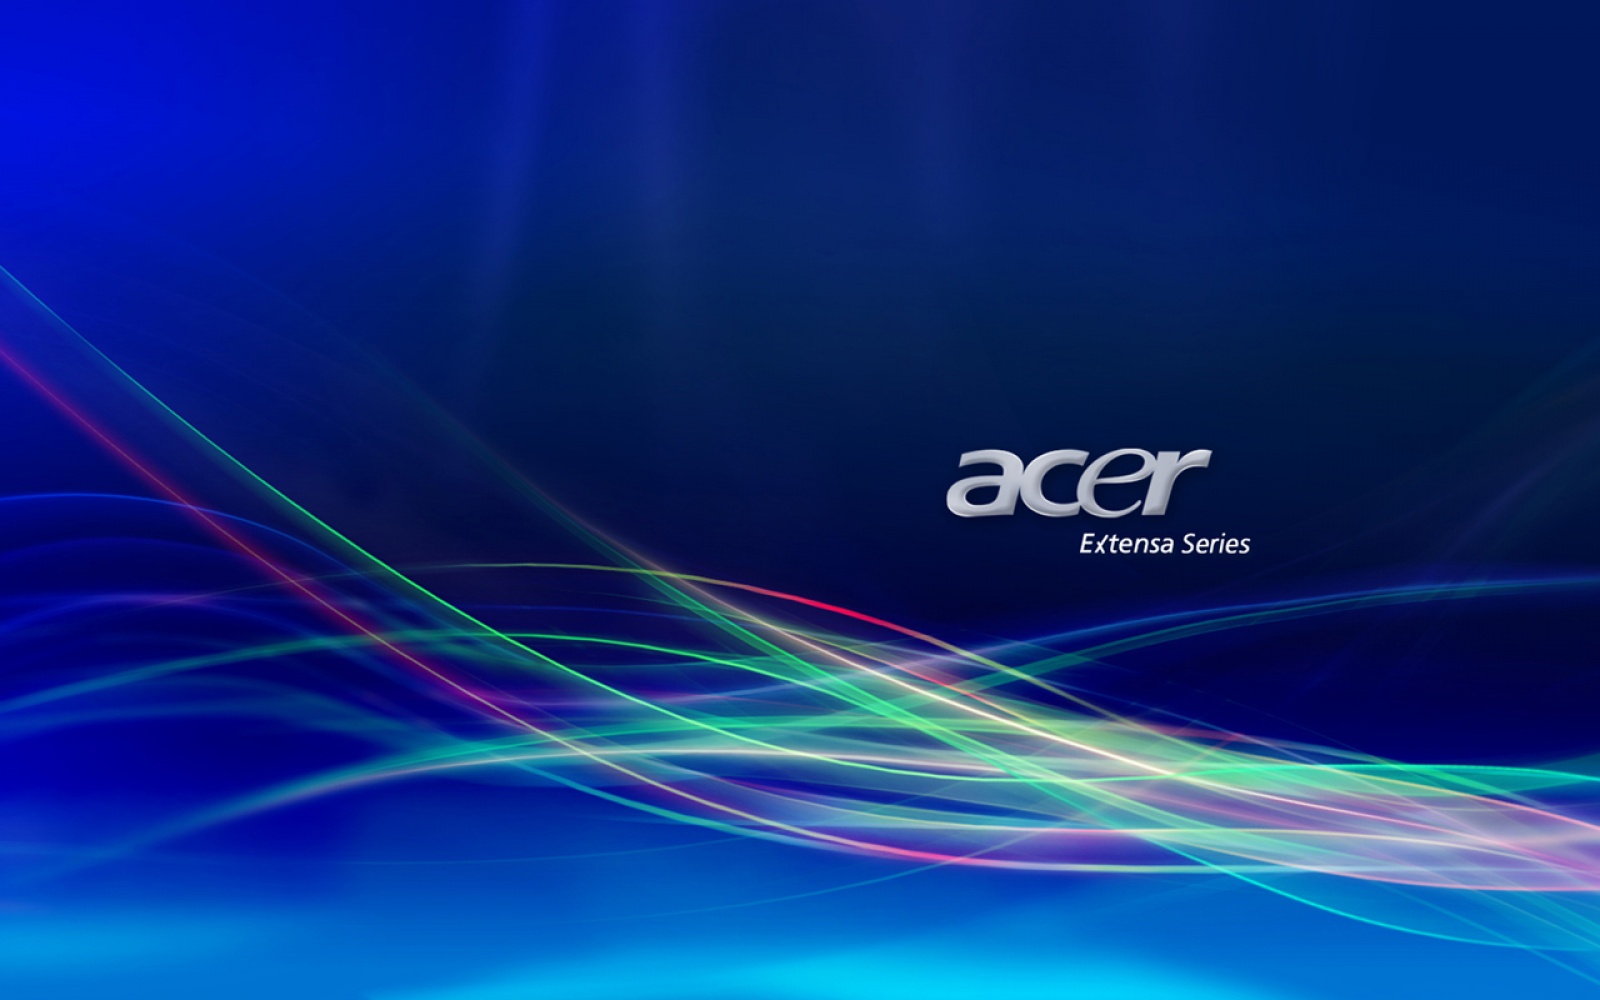 Top 10 Stunning Acer Desktop Wallpaper